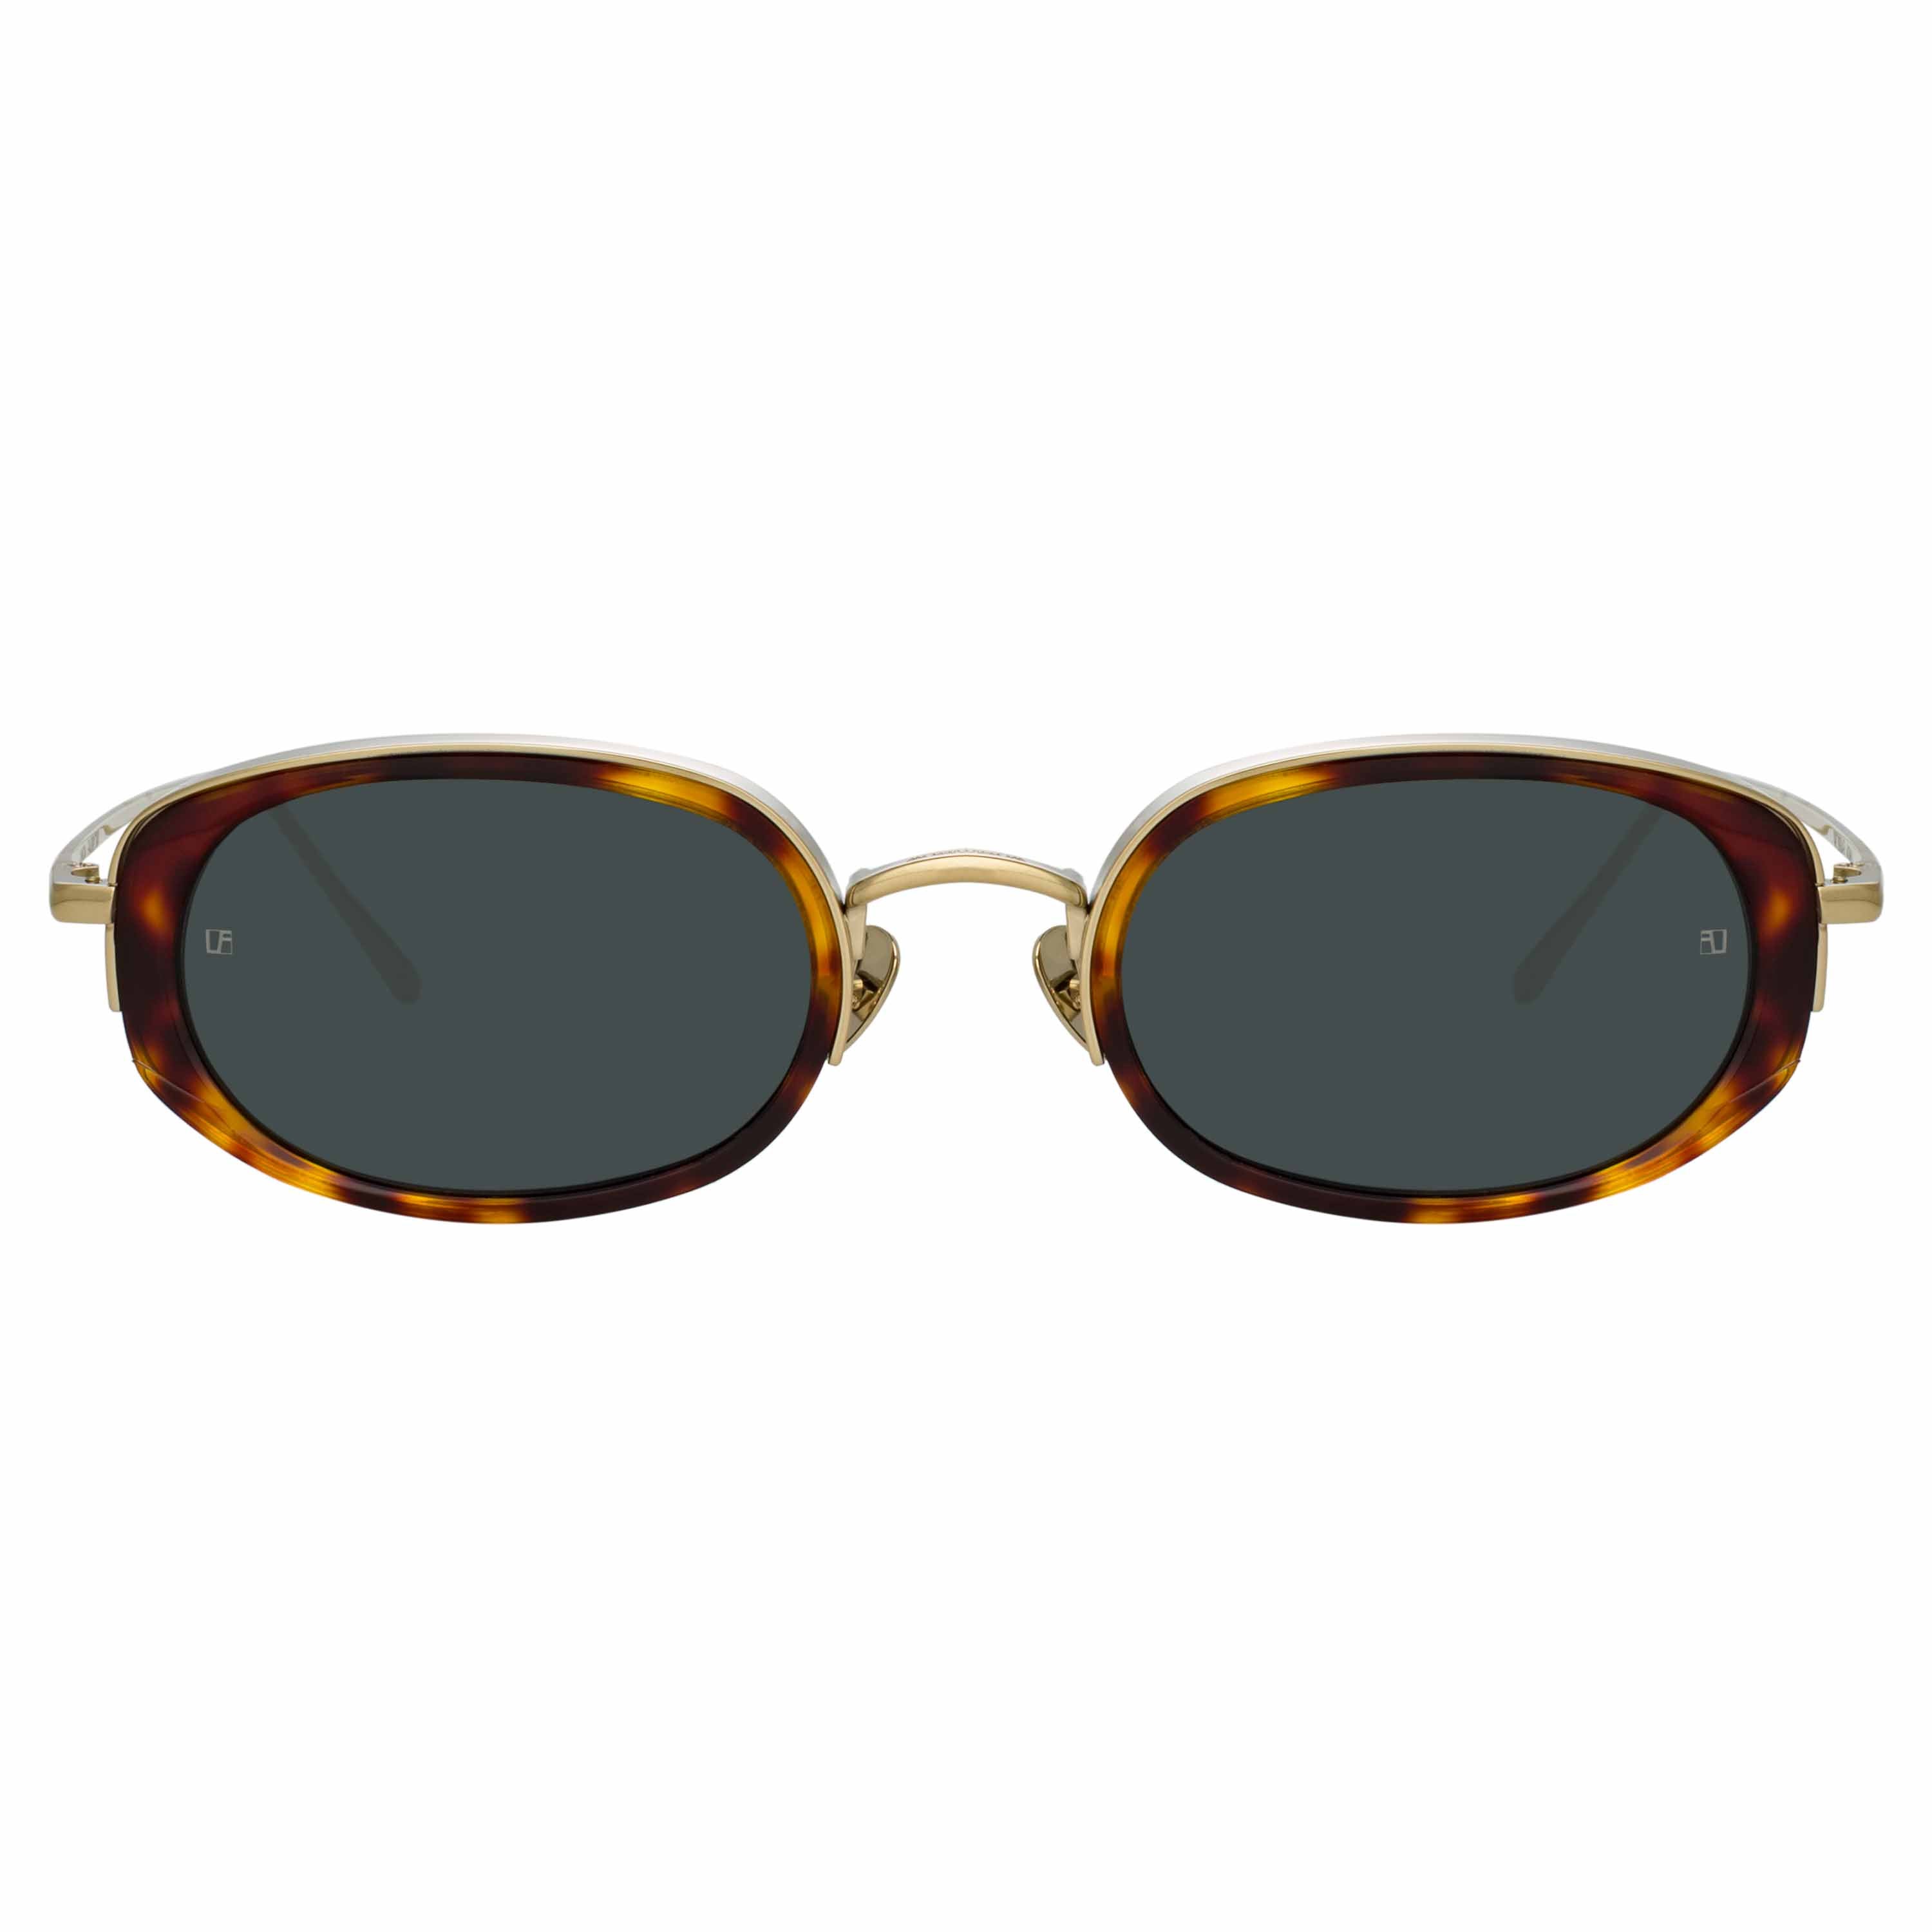 Rosie Oval Sunglasses in Tortoiseshell